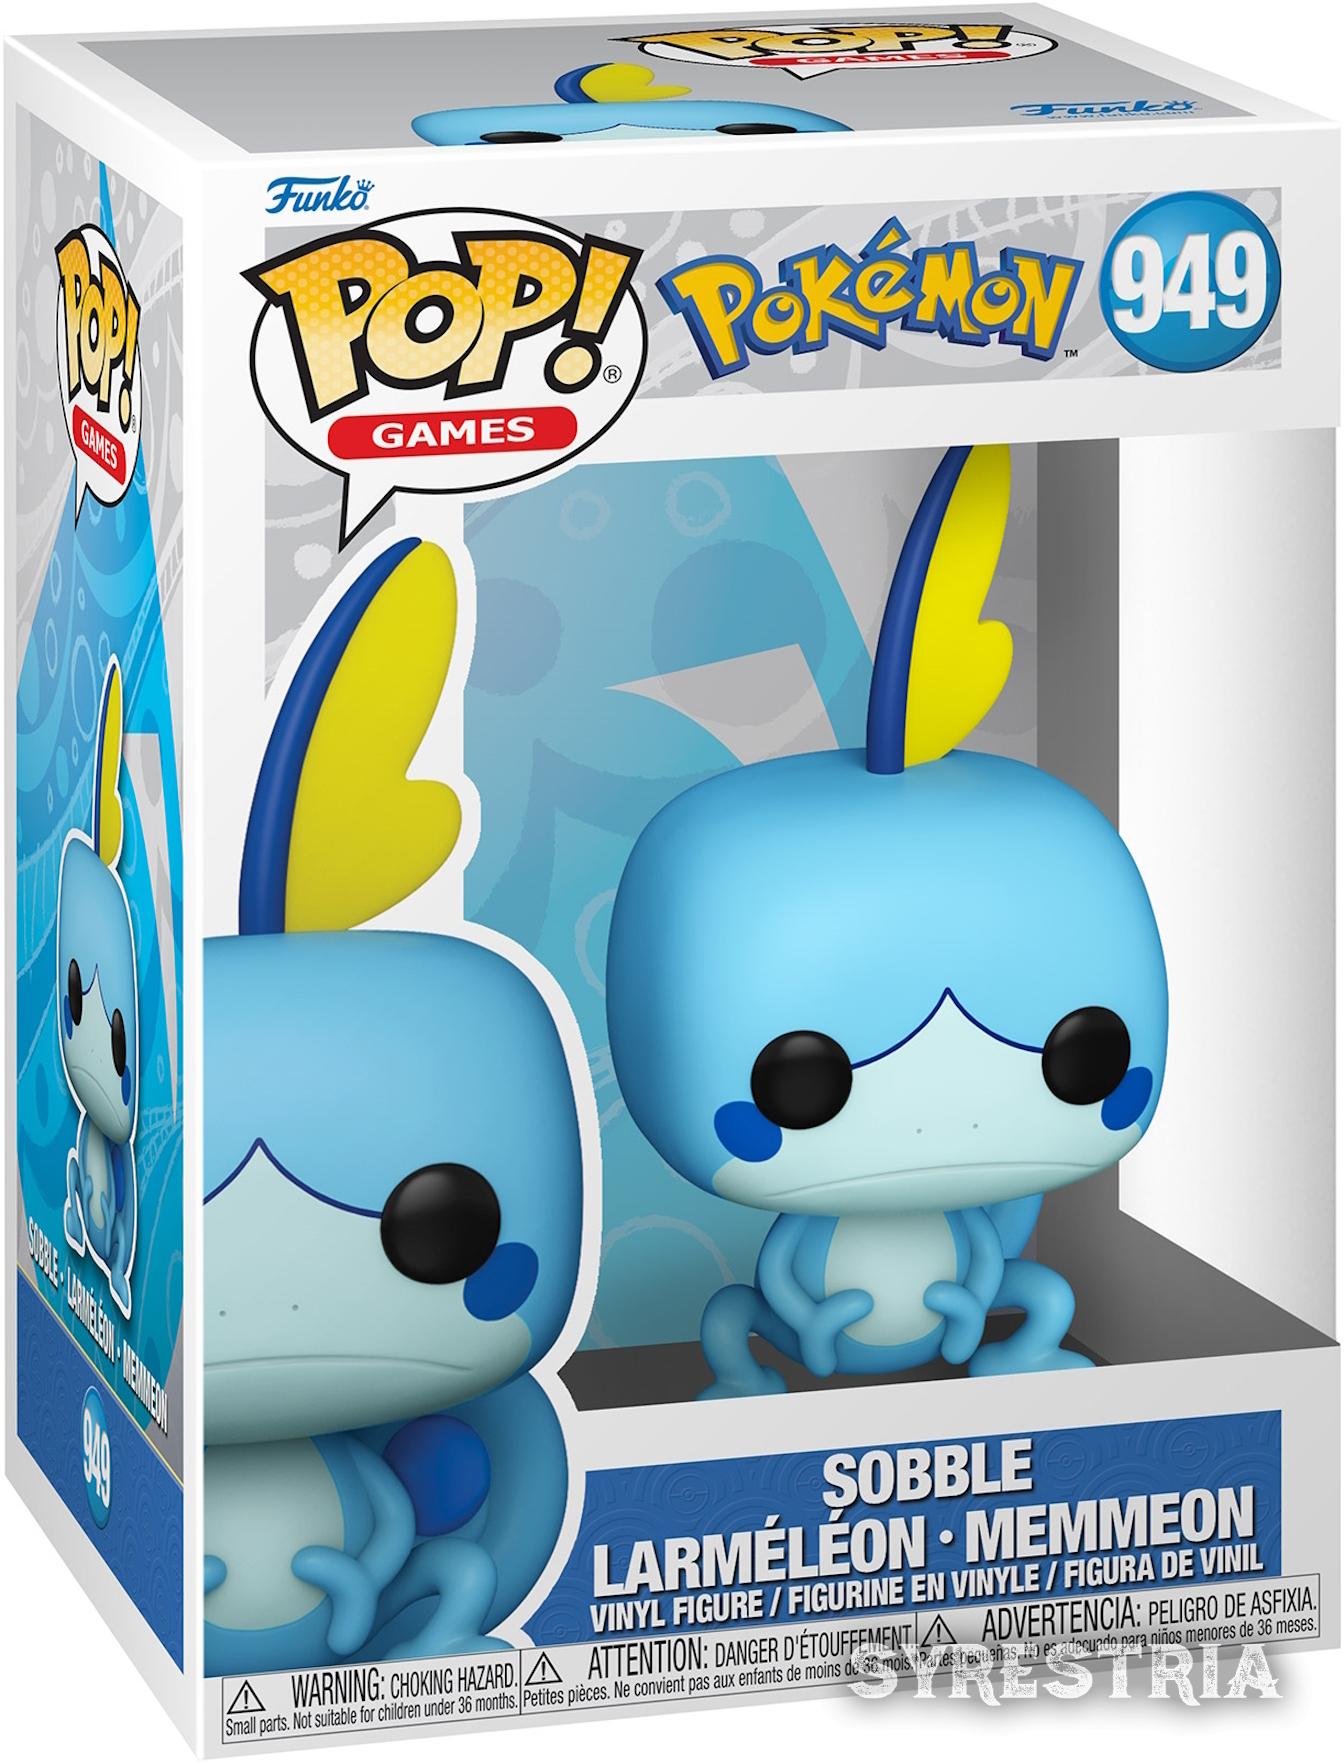 Pokémon - Sobble Larméléon Memmeon 949  - Funko Pop! Vinyl Figur